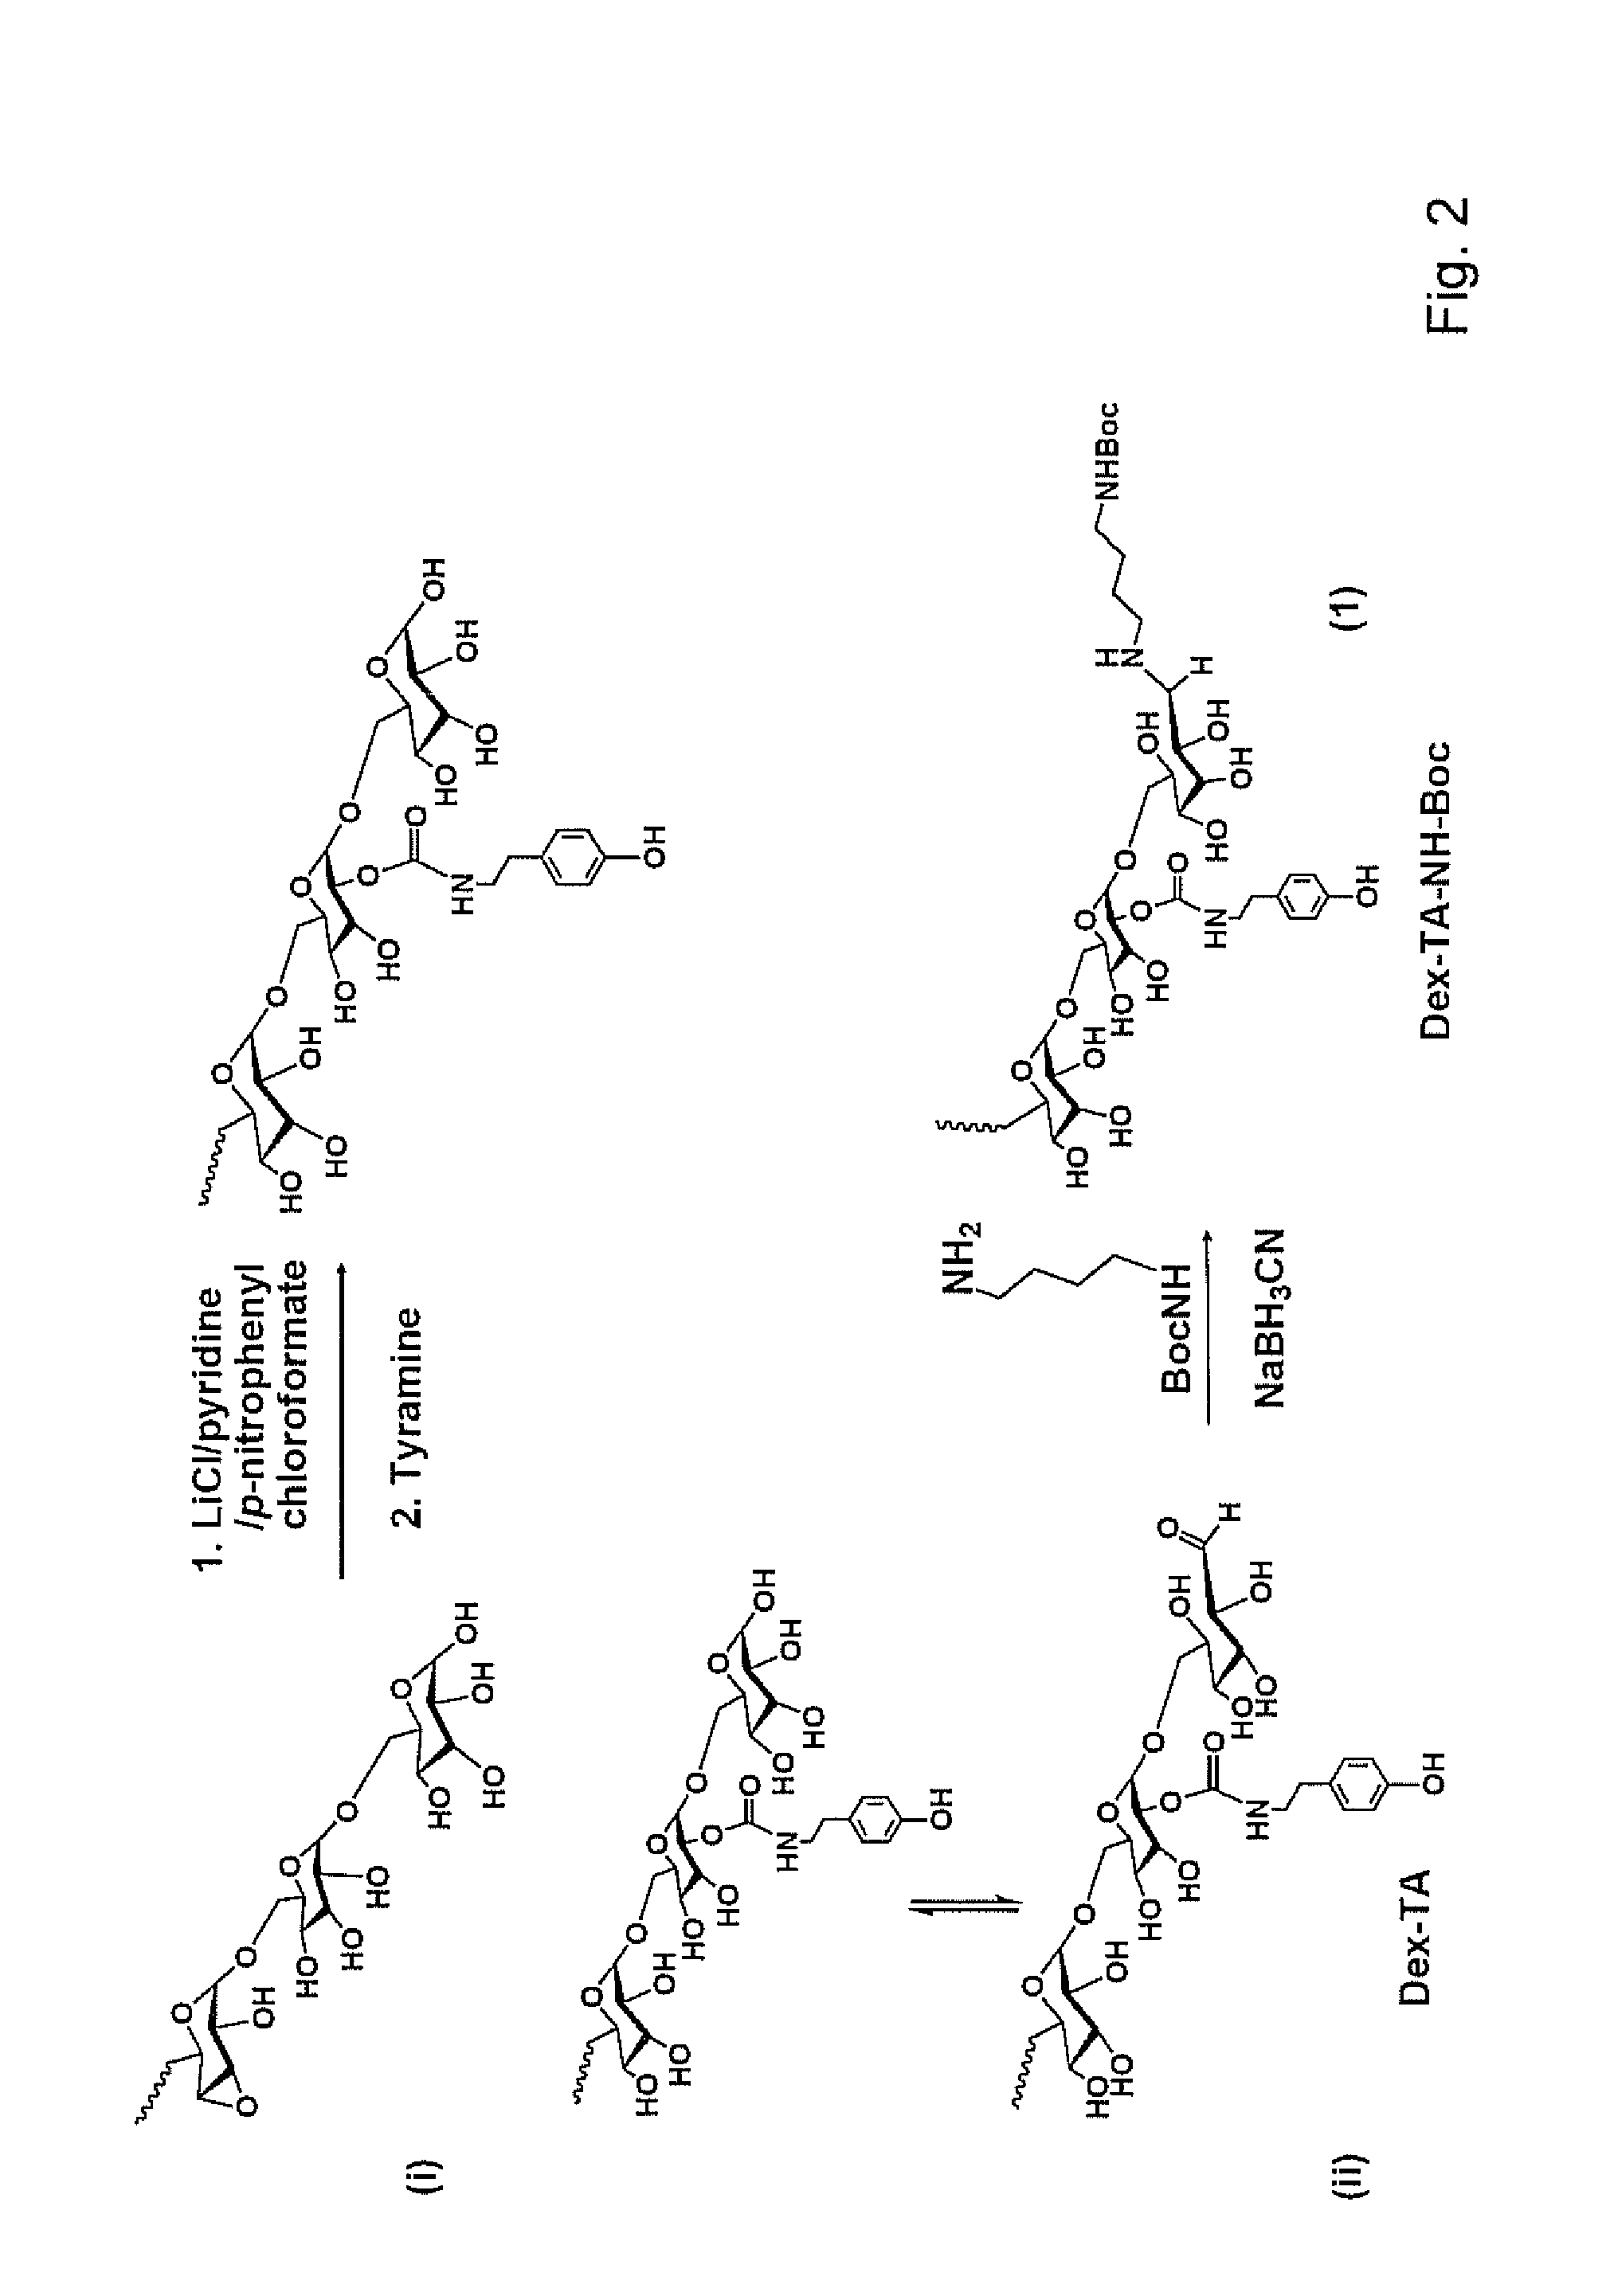 Dextran-hyaluronic acid based hydrogels